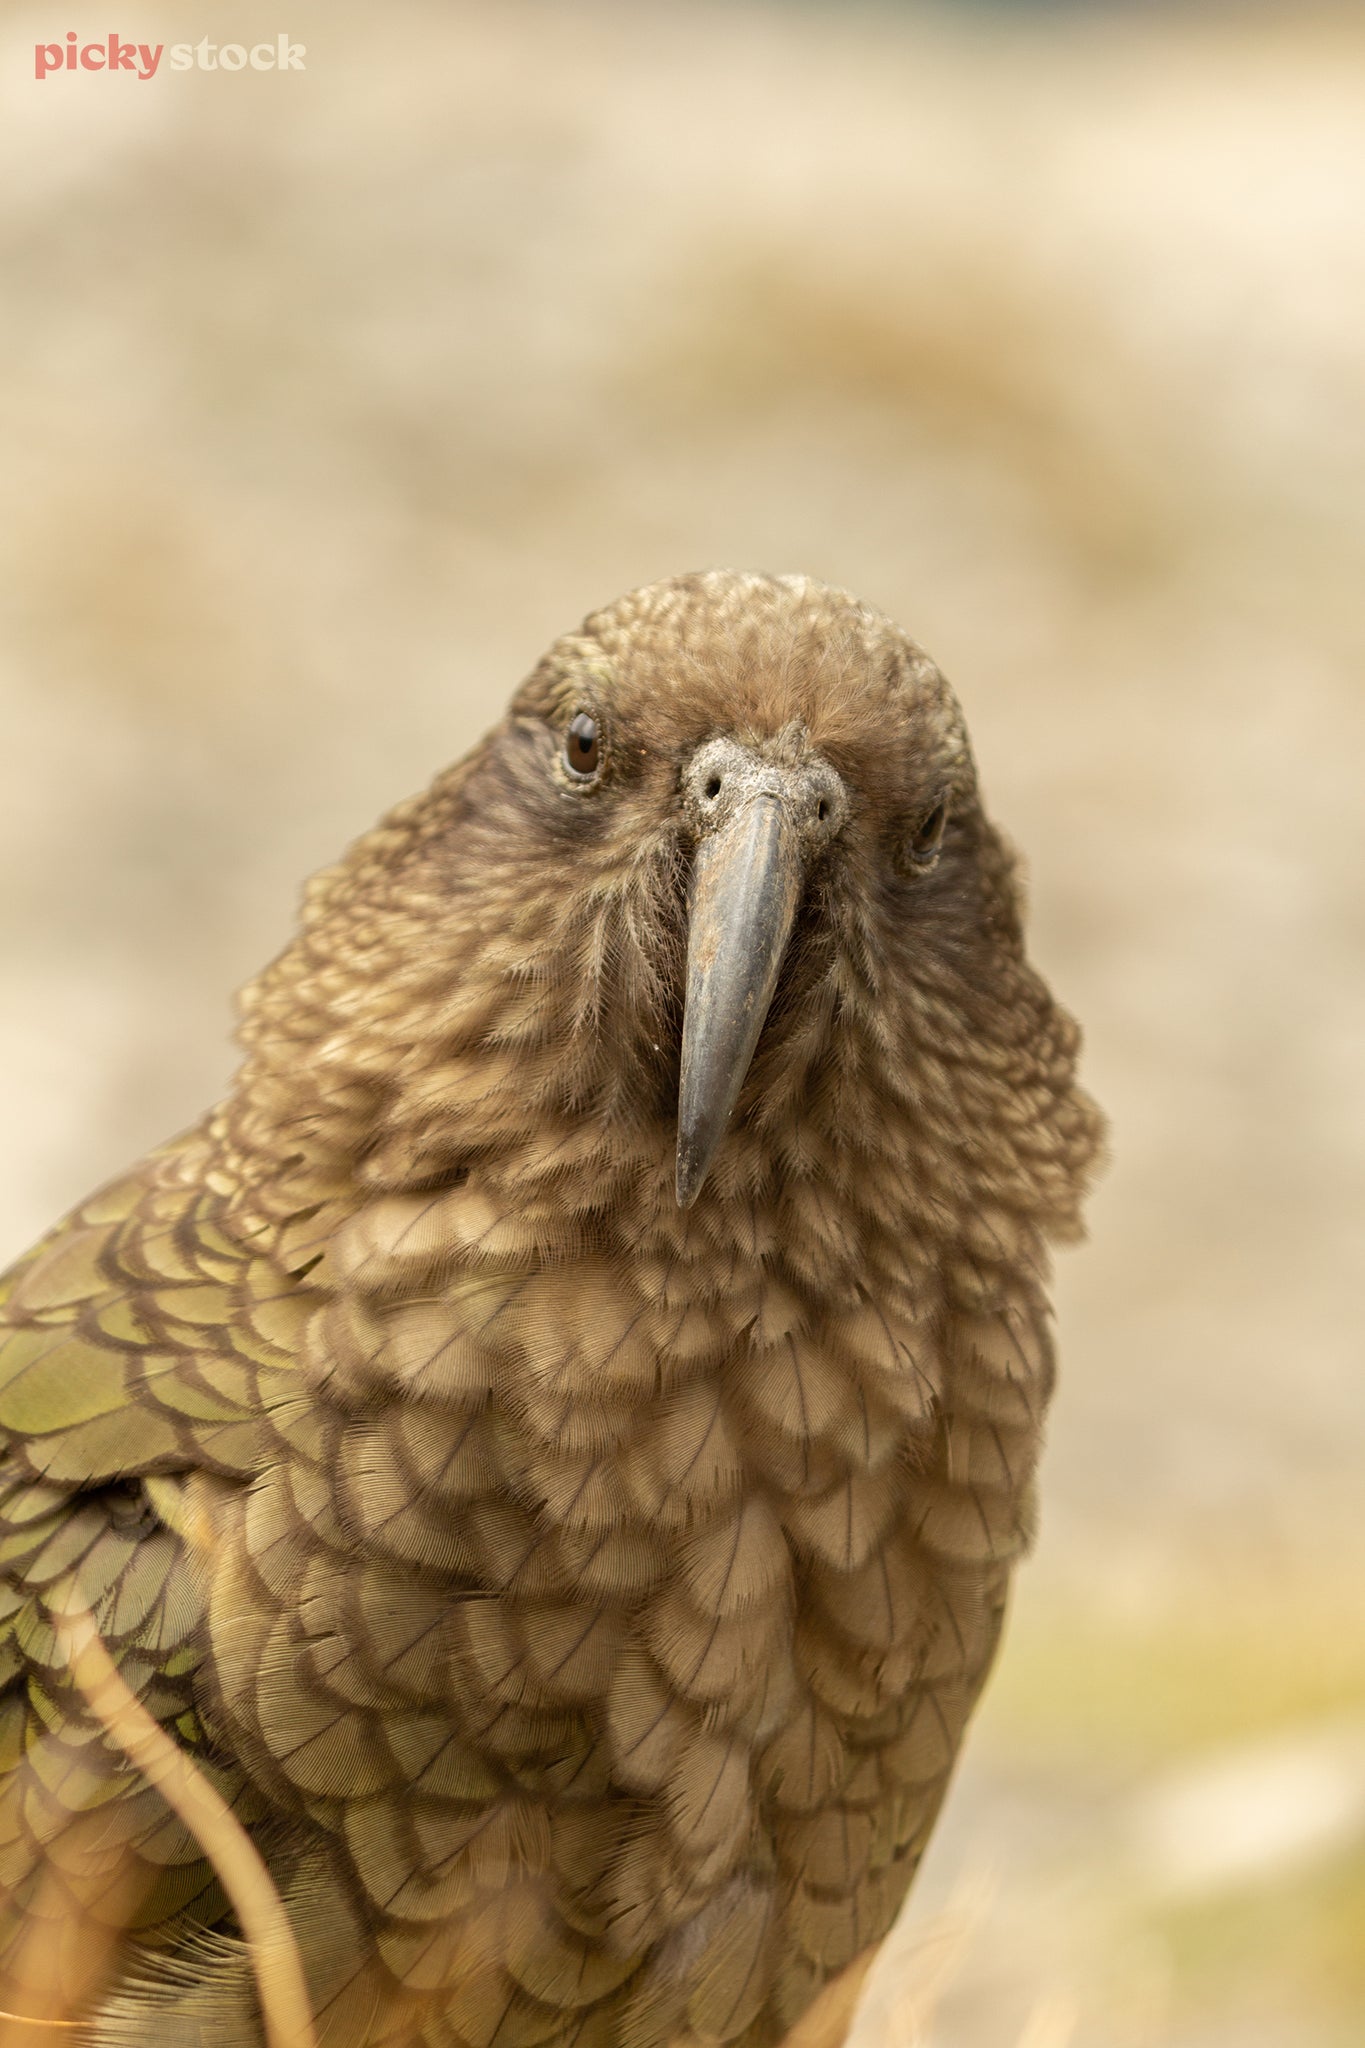 Portrait close-up of a Kea looking perplexed at the camera.